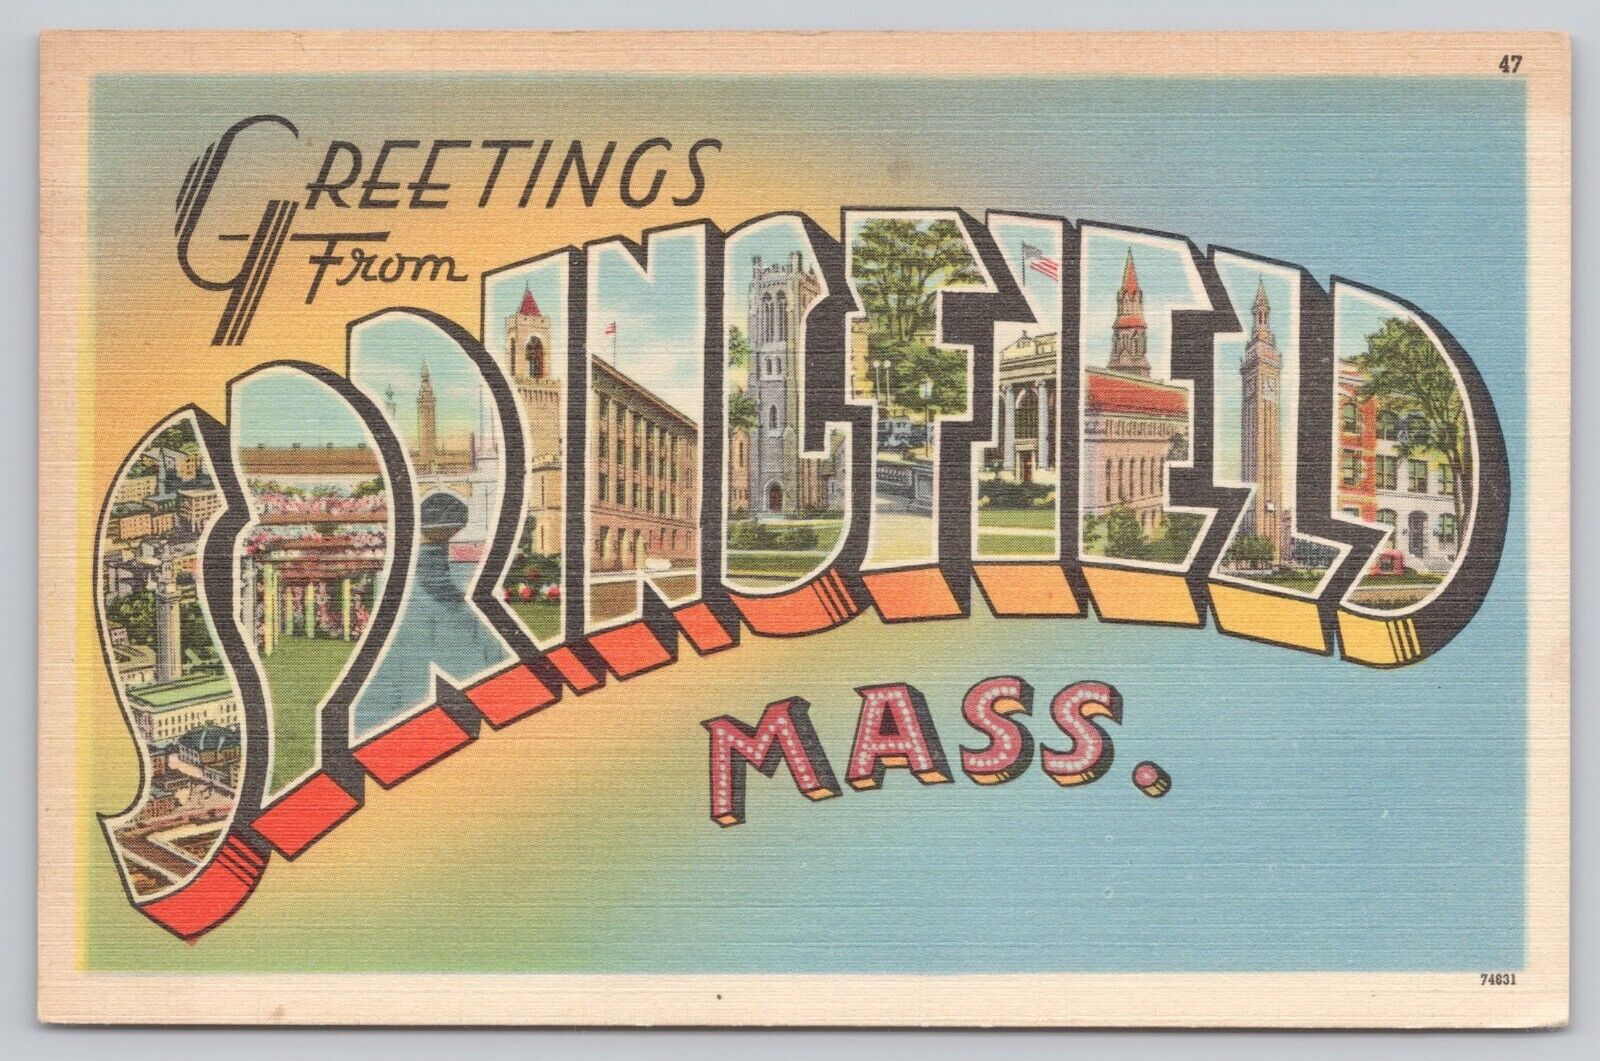 Springfield Massachusetts, Large Letter Greetings, Vintage Postcard